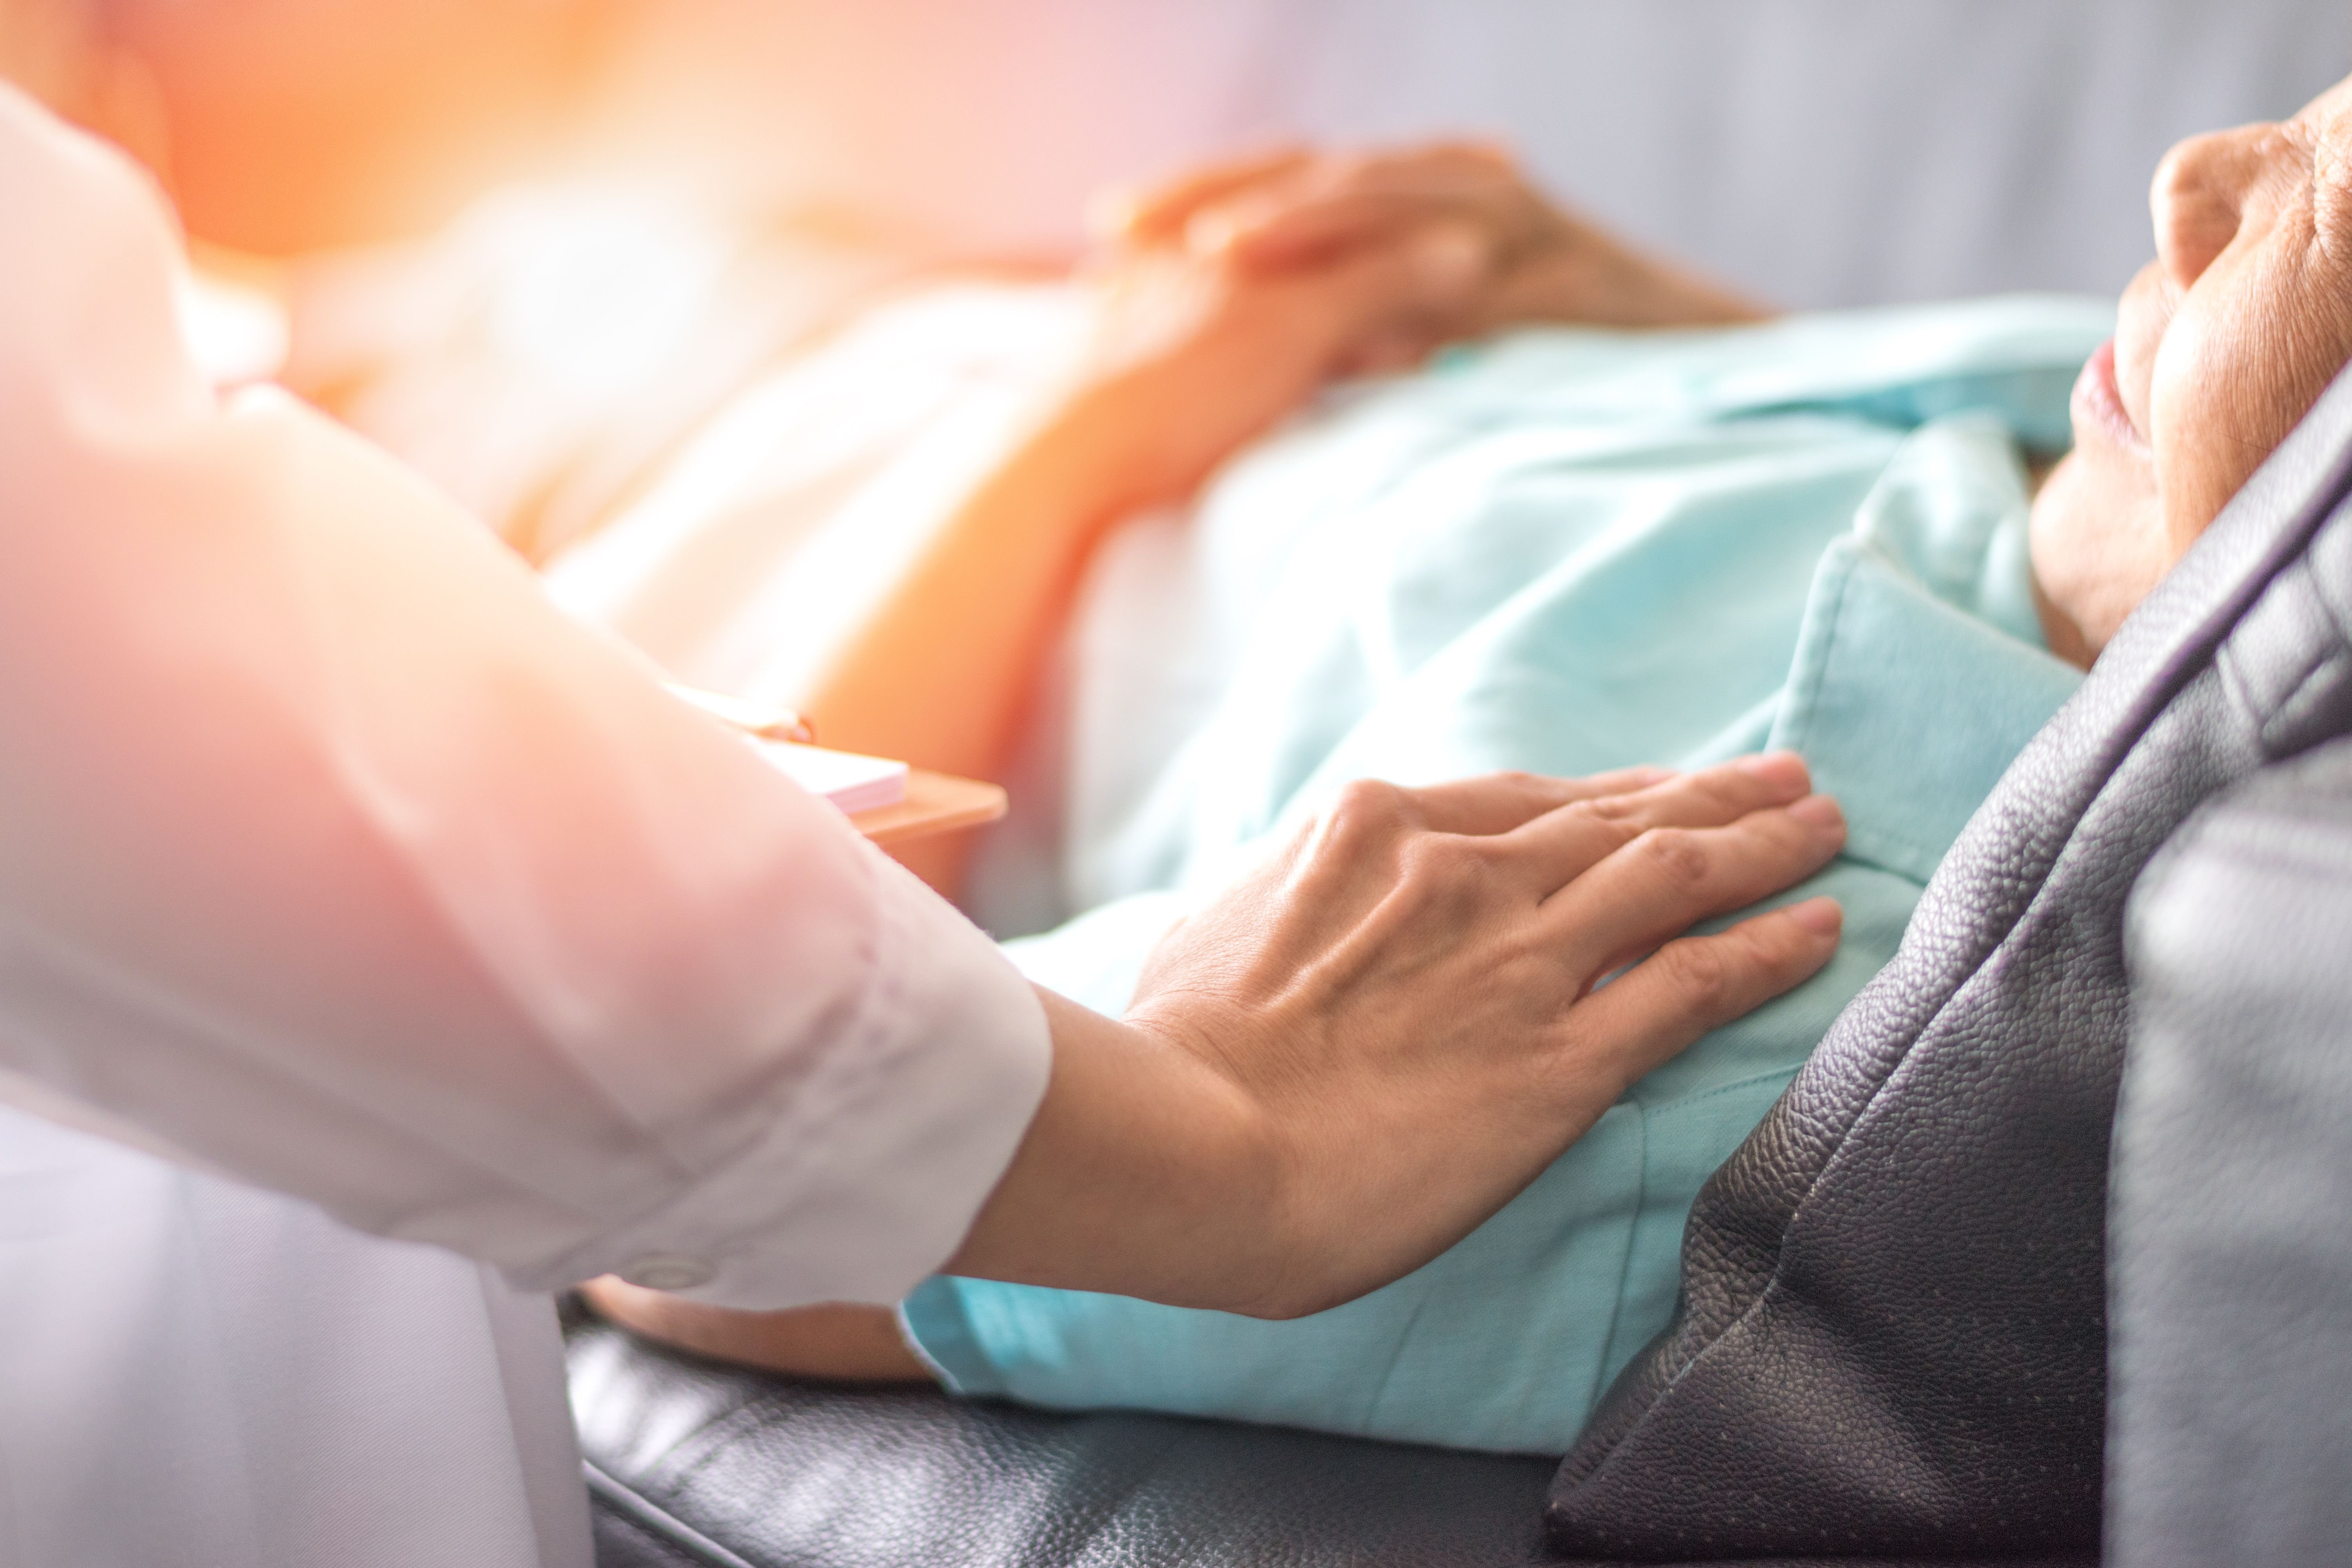 A doctor' hand on a bedridden patient's shoulder.| Source: Shutterstock